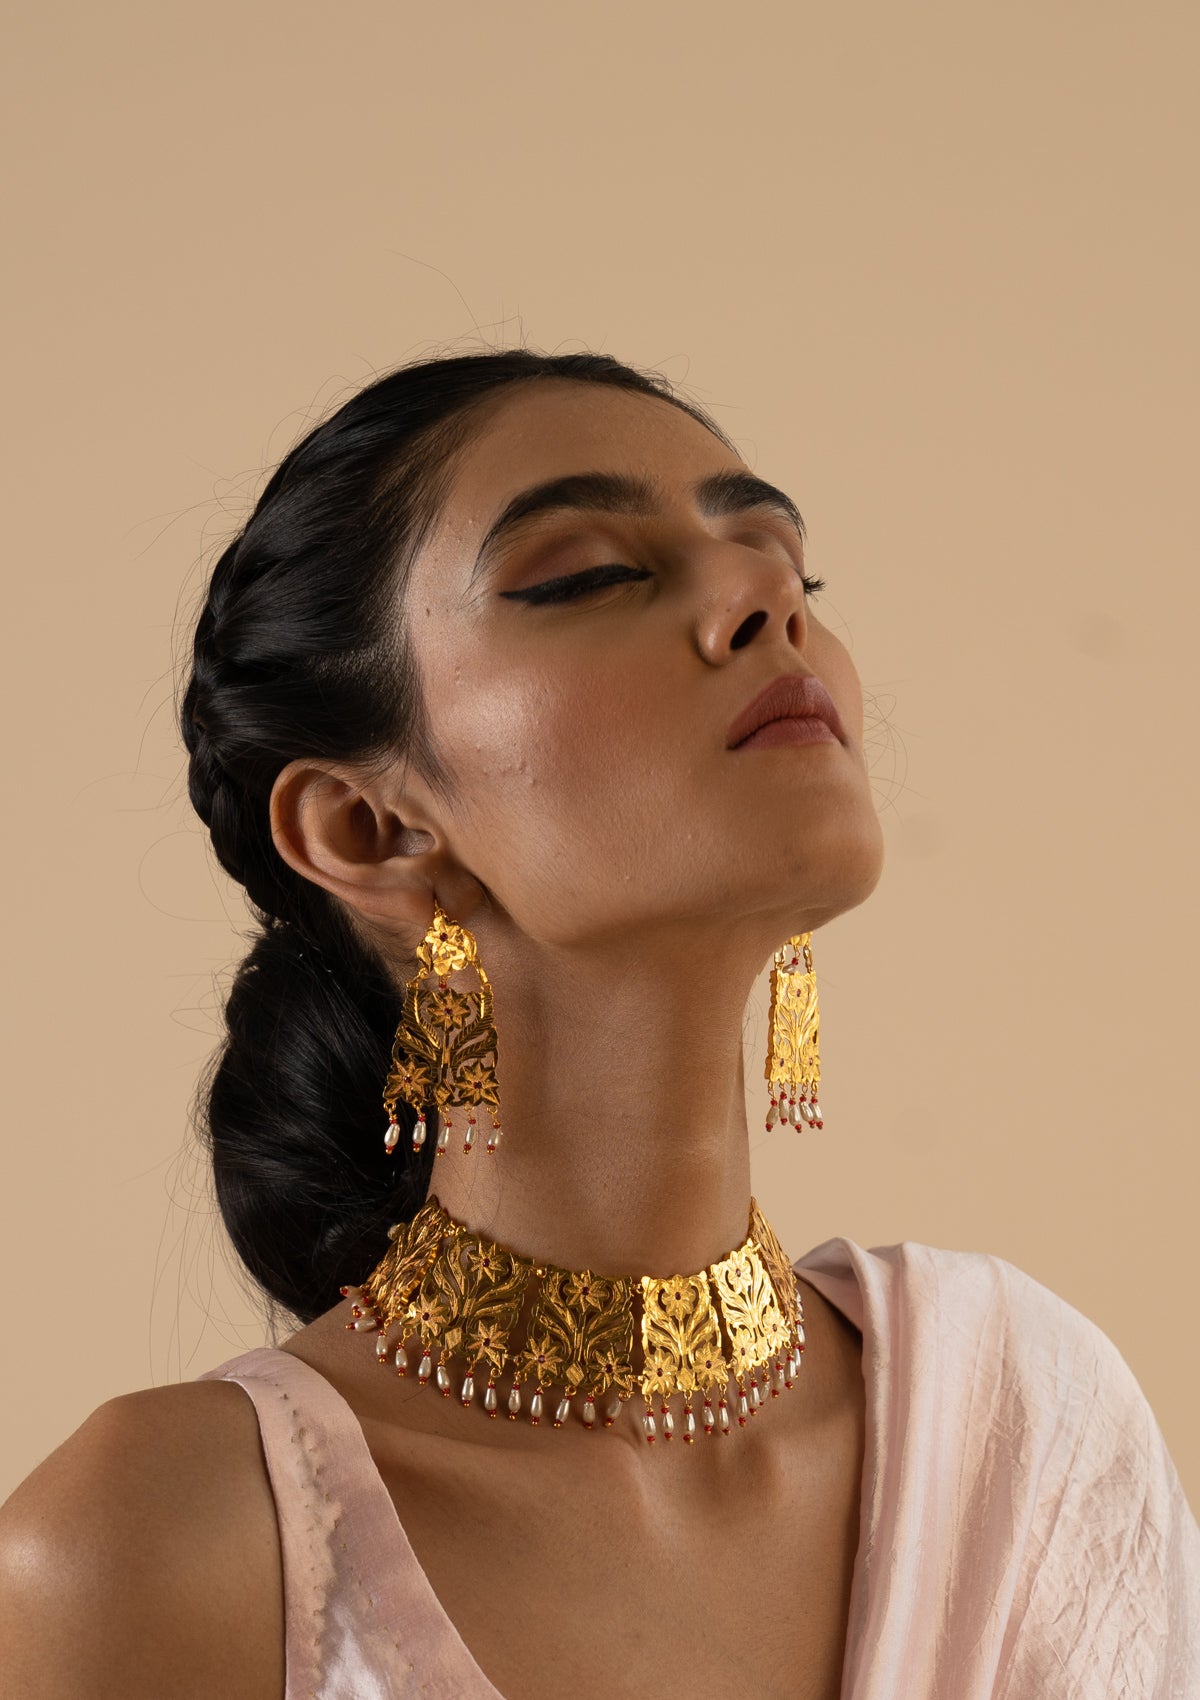 Nadira Gold Tone Necklace & Earrings Set